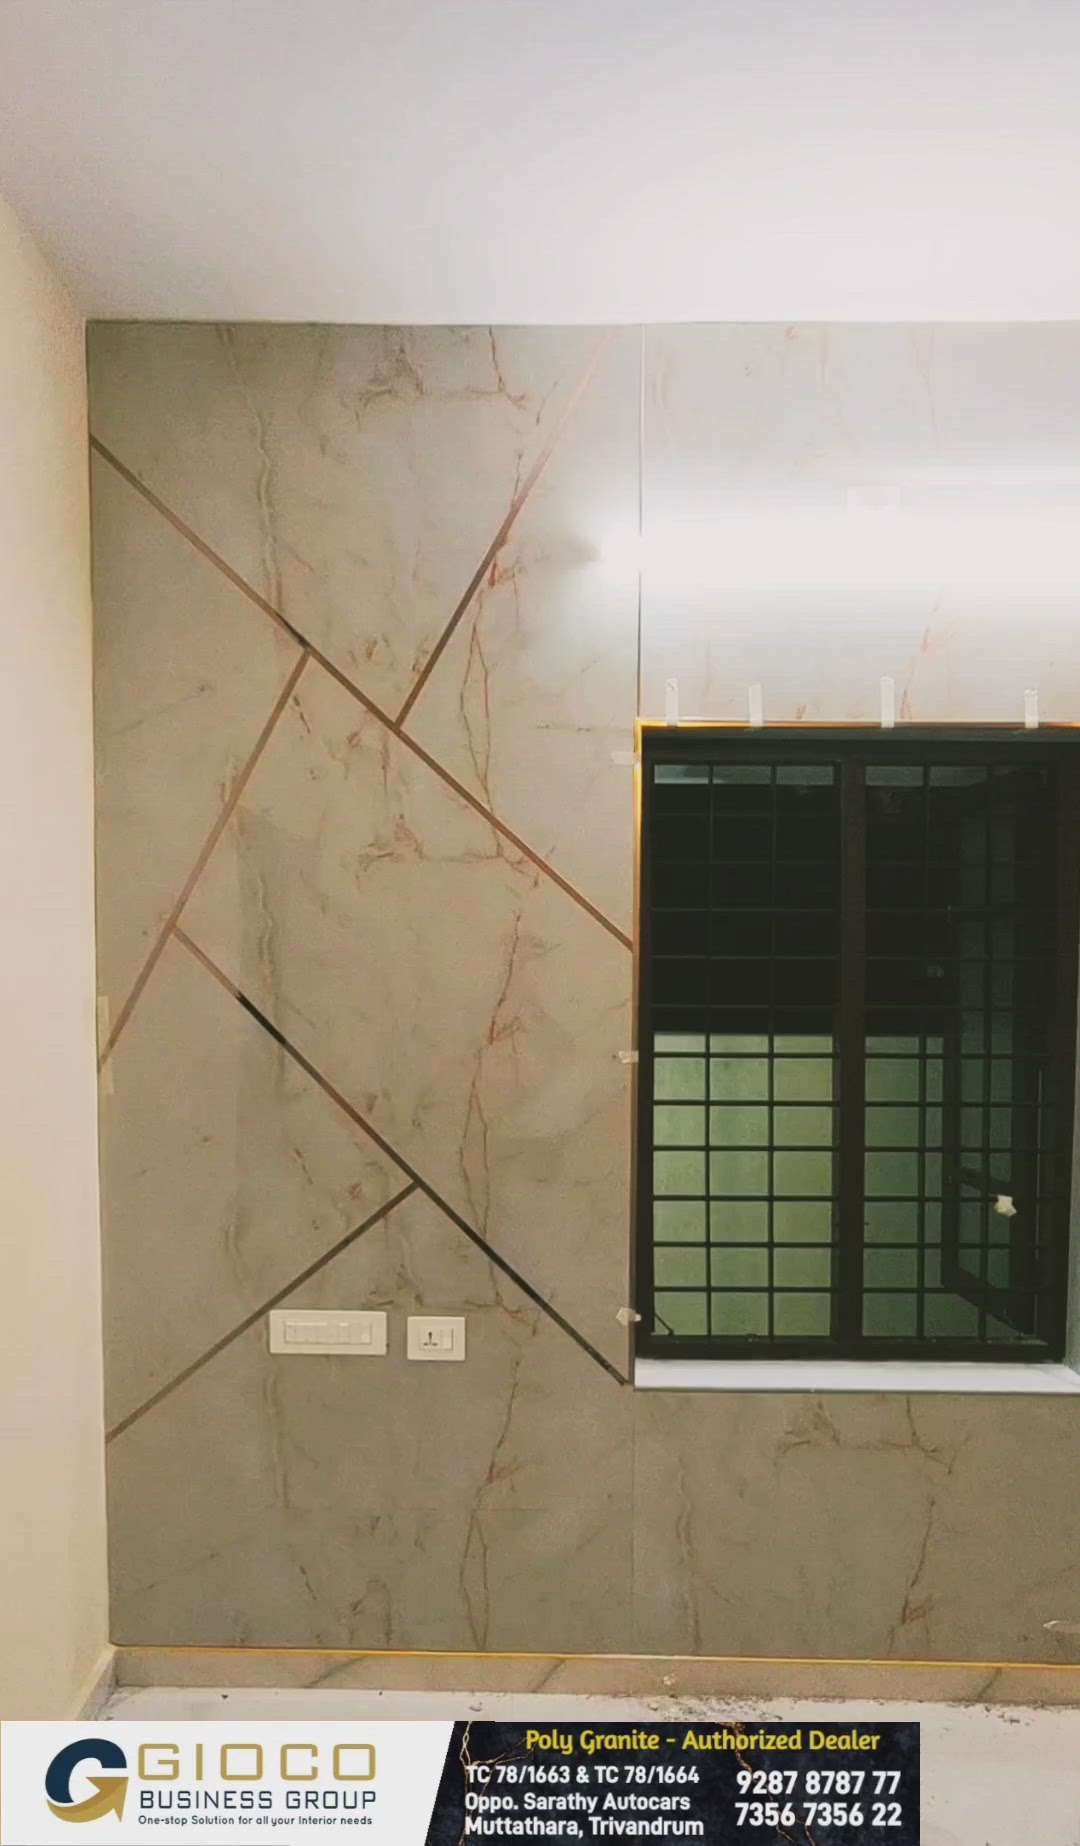 Wall decor works using poly granite
#polygranite #ssbars #WallDecors #HomeDecor